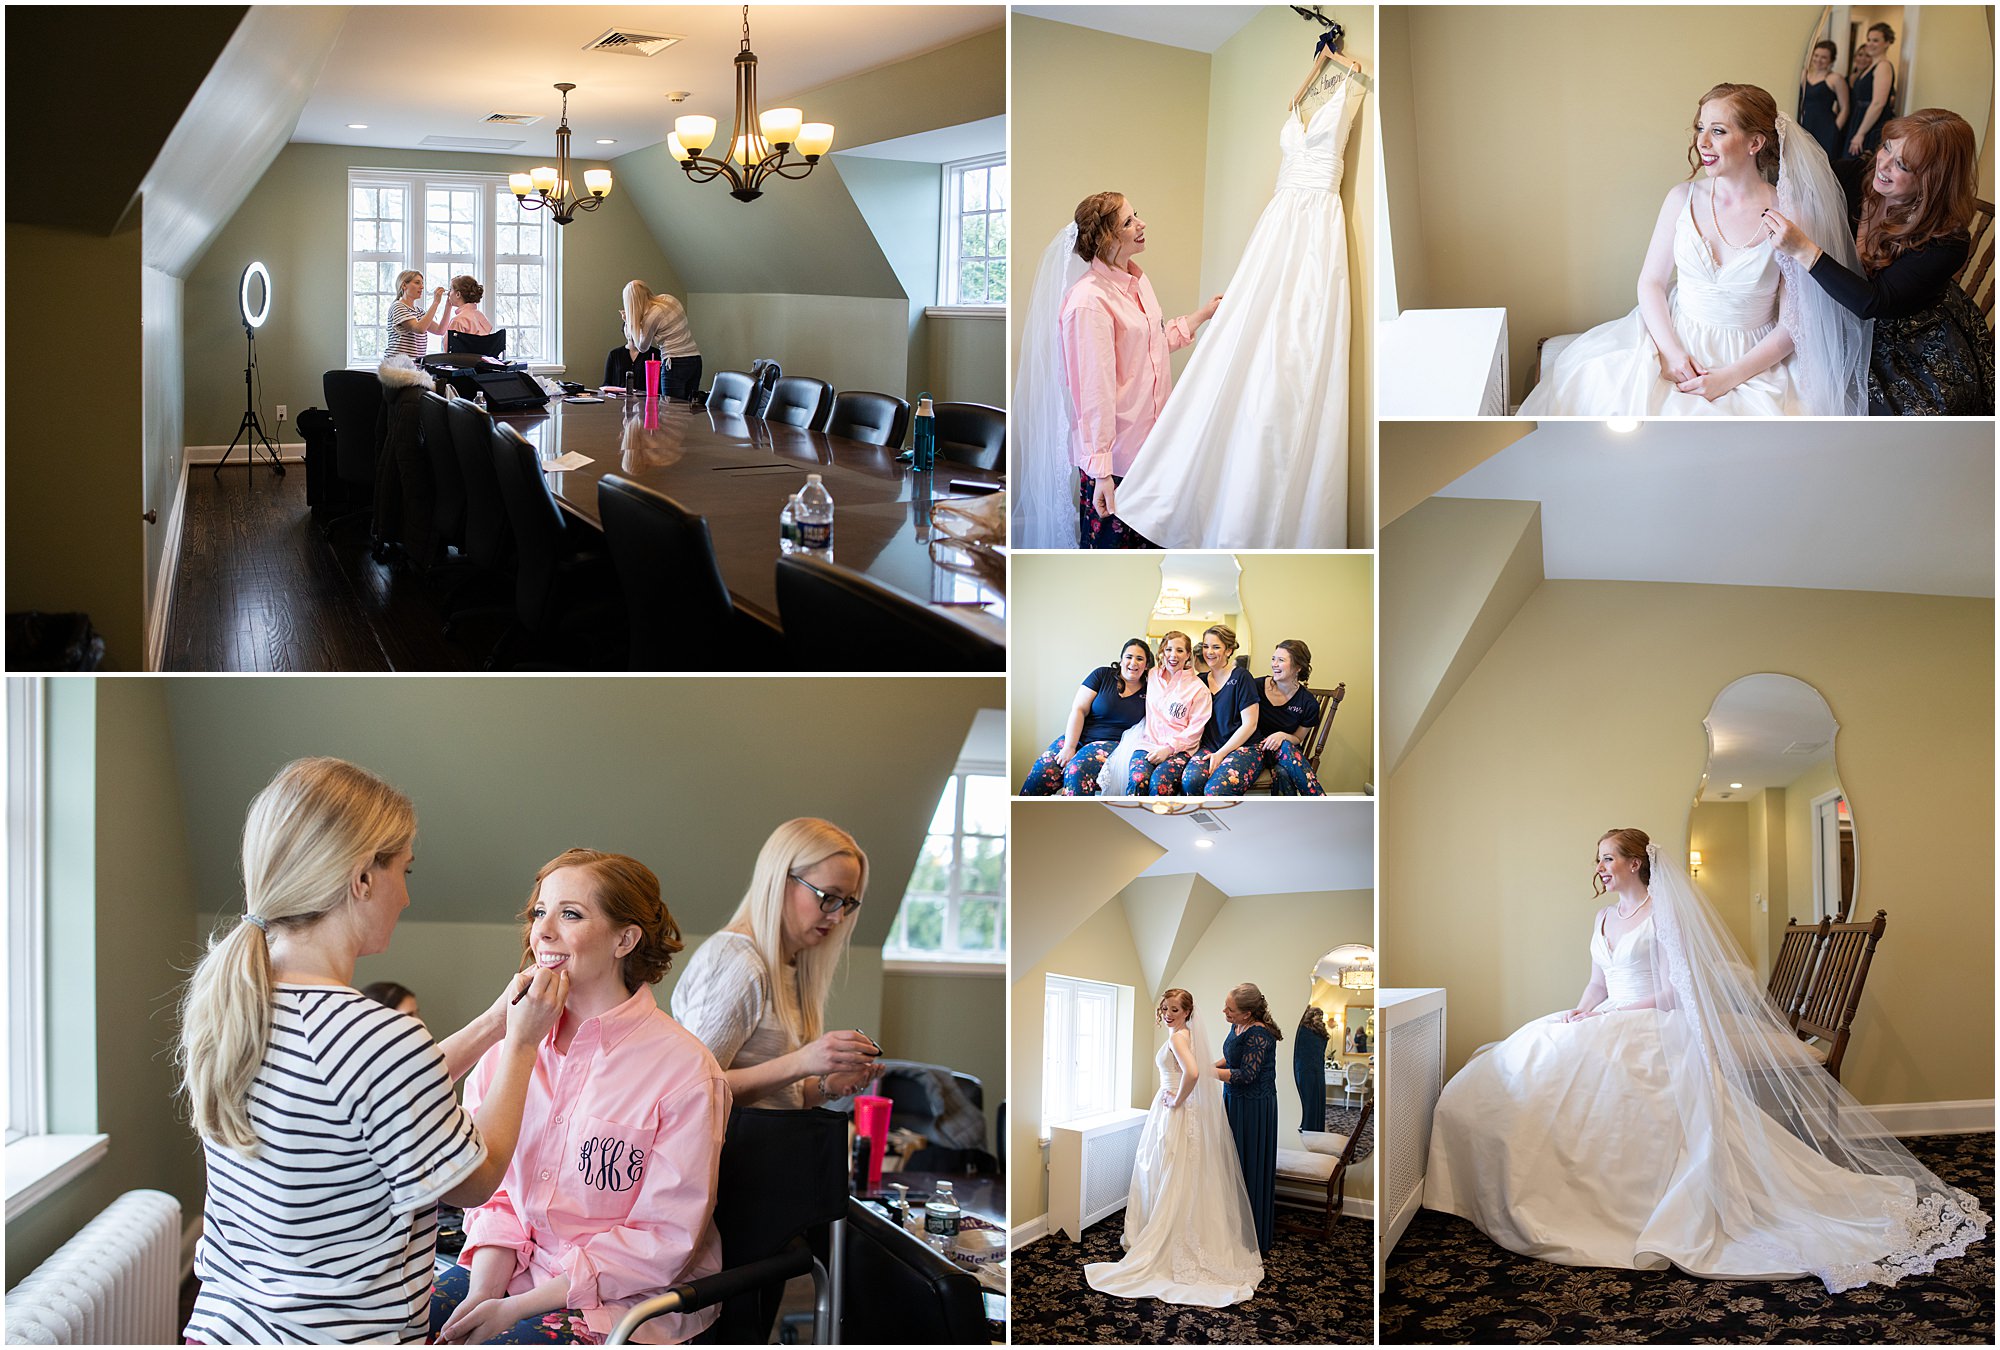 Best Wedding Venues in South Jersey: Moorestown Community House bridal suite